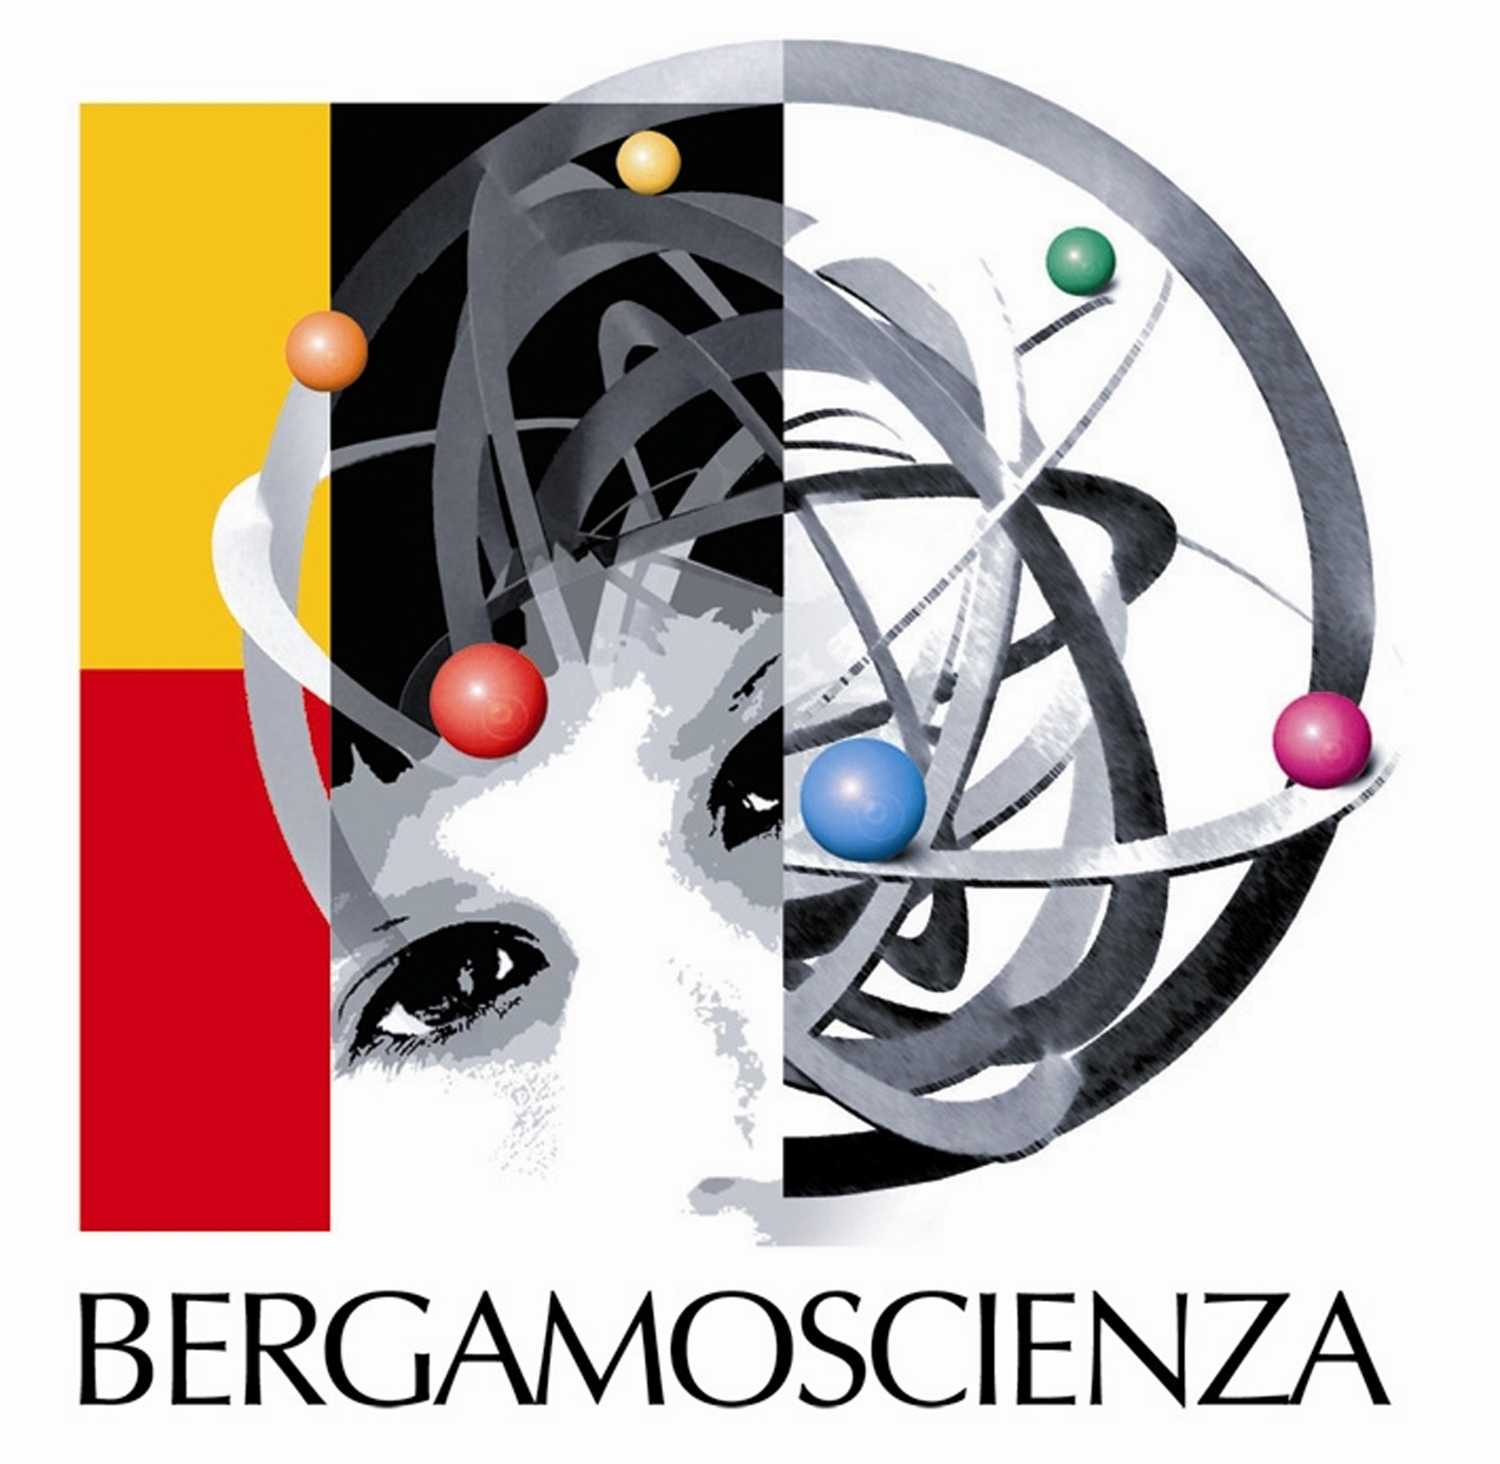 The Pesenti Foundation for BergamoScienza